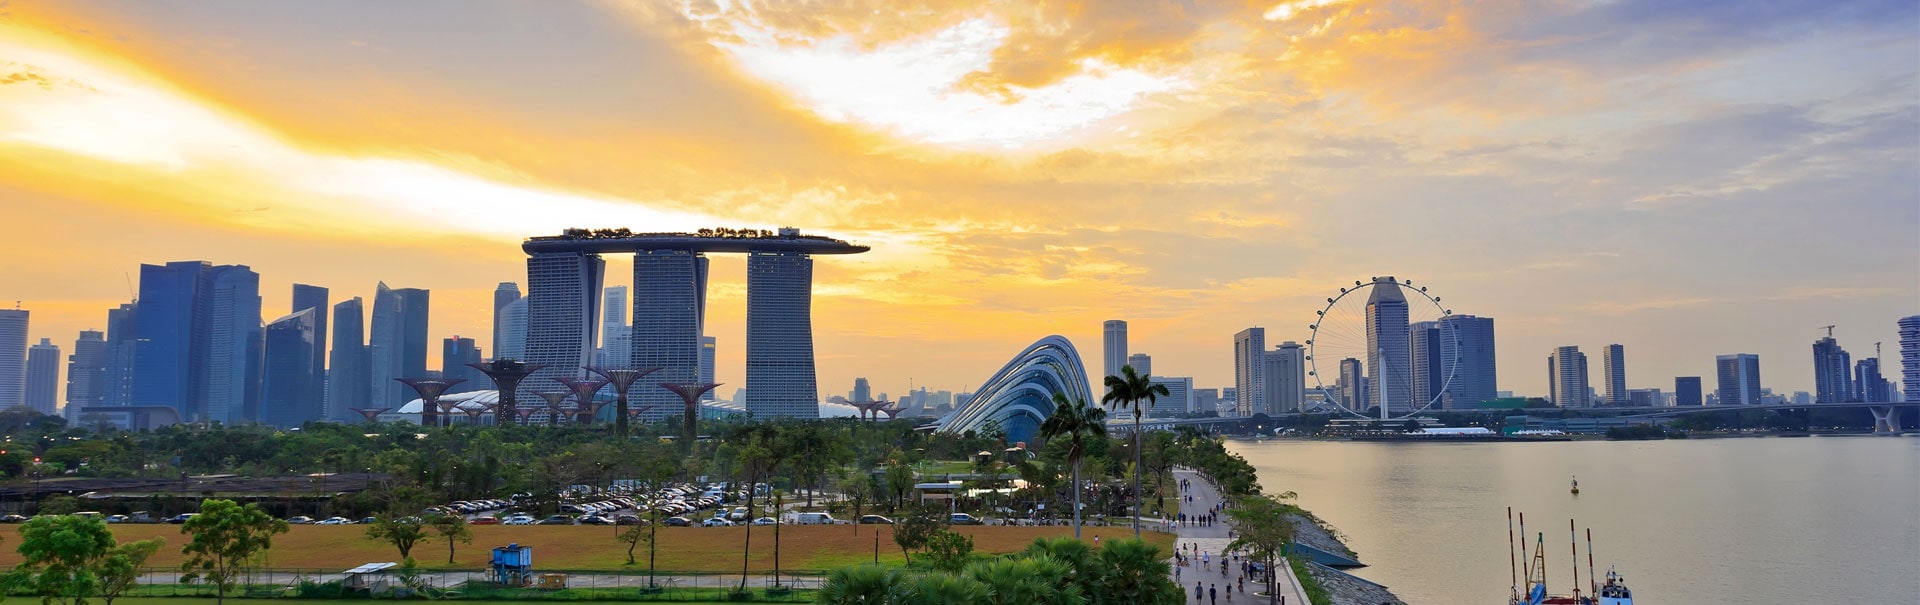 7 Days 6 Nights Singapore with Bintan Island Customized Holidays Tour ...